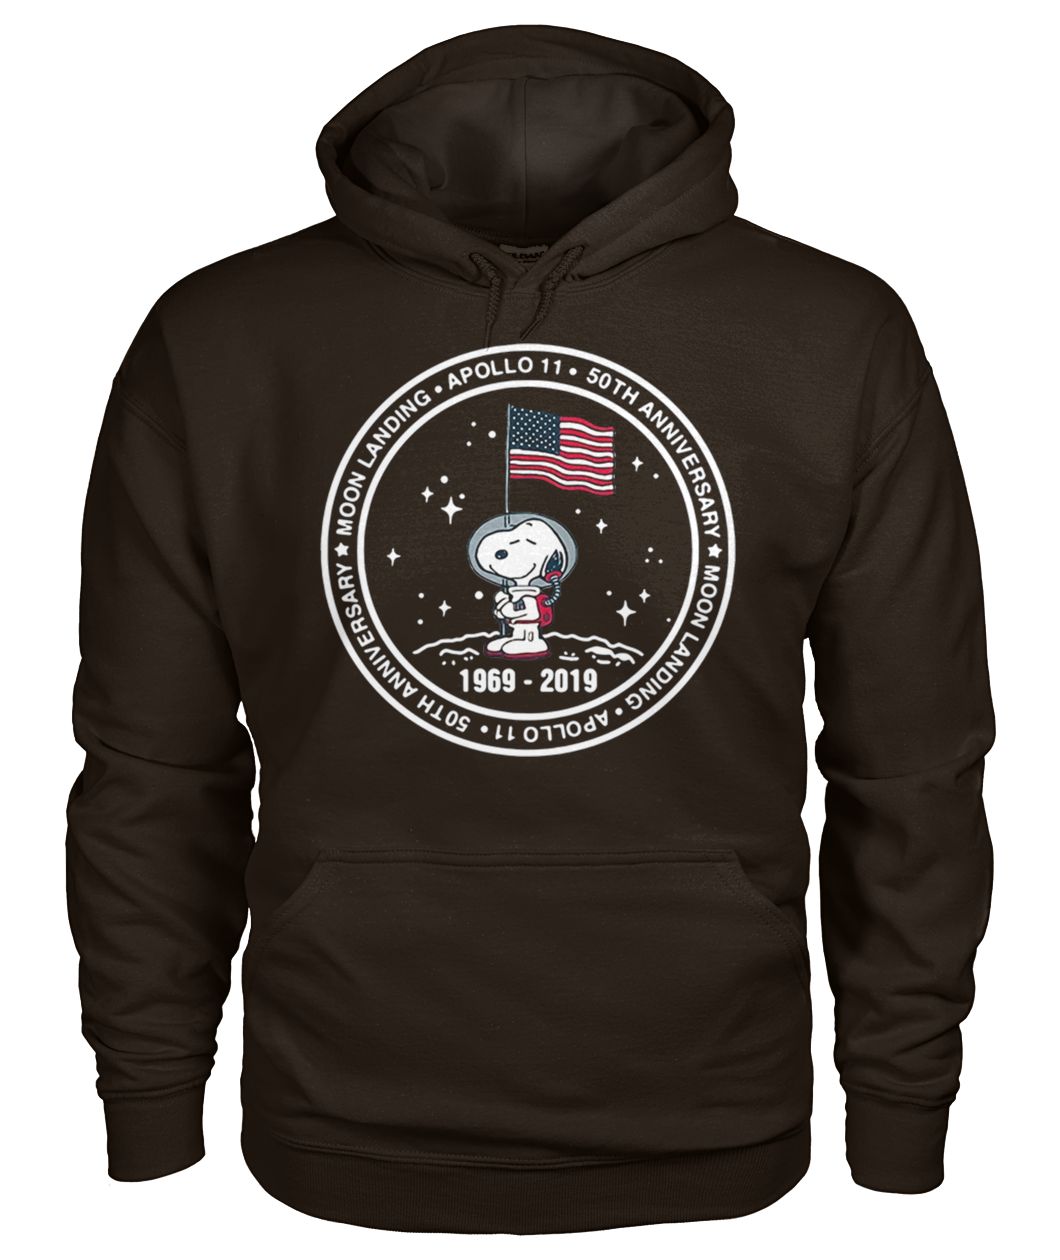 Snoopy 50 anniversary apollo 11 moon landing 1969 2019 gildan hoodie